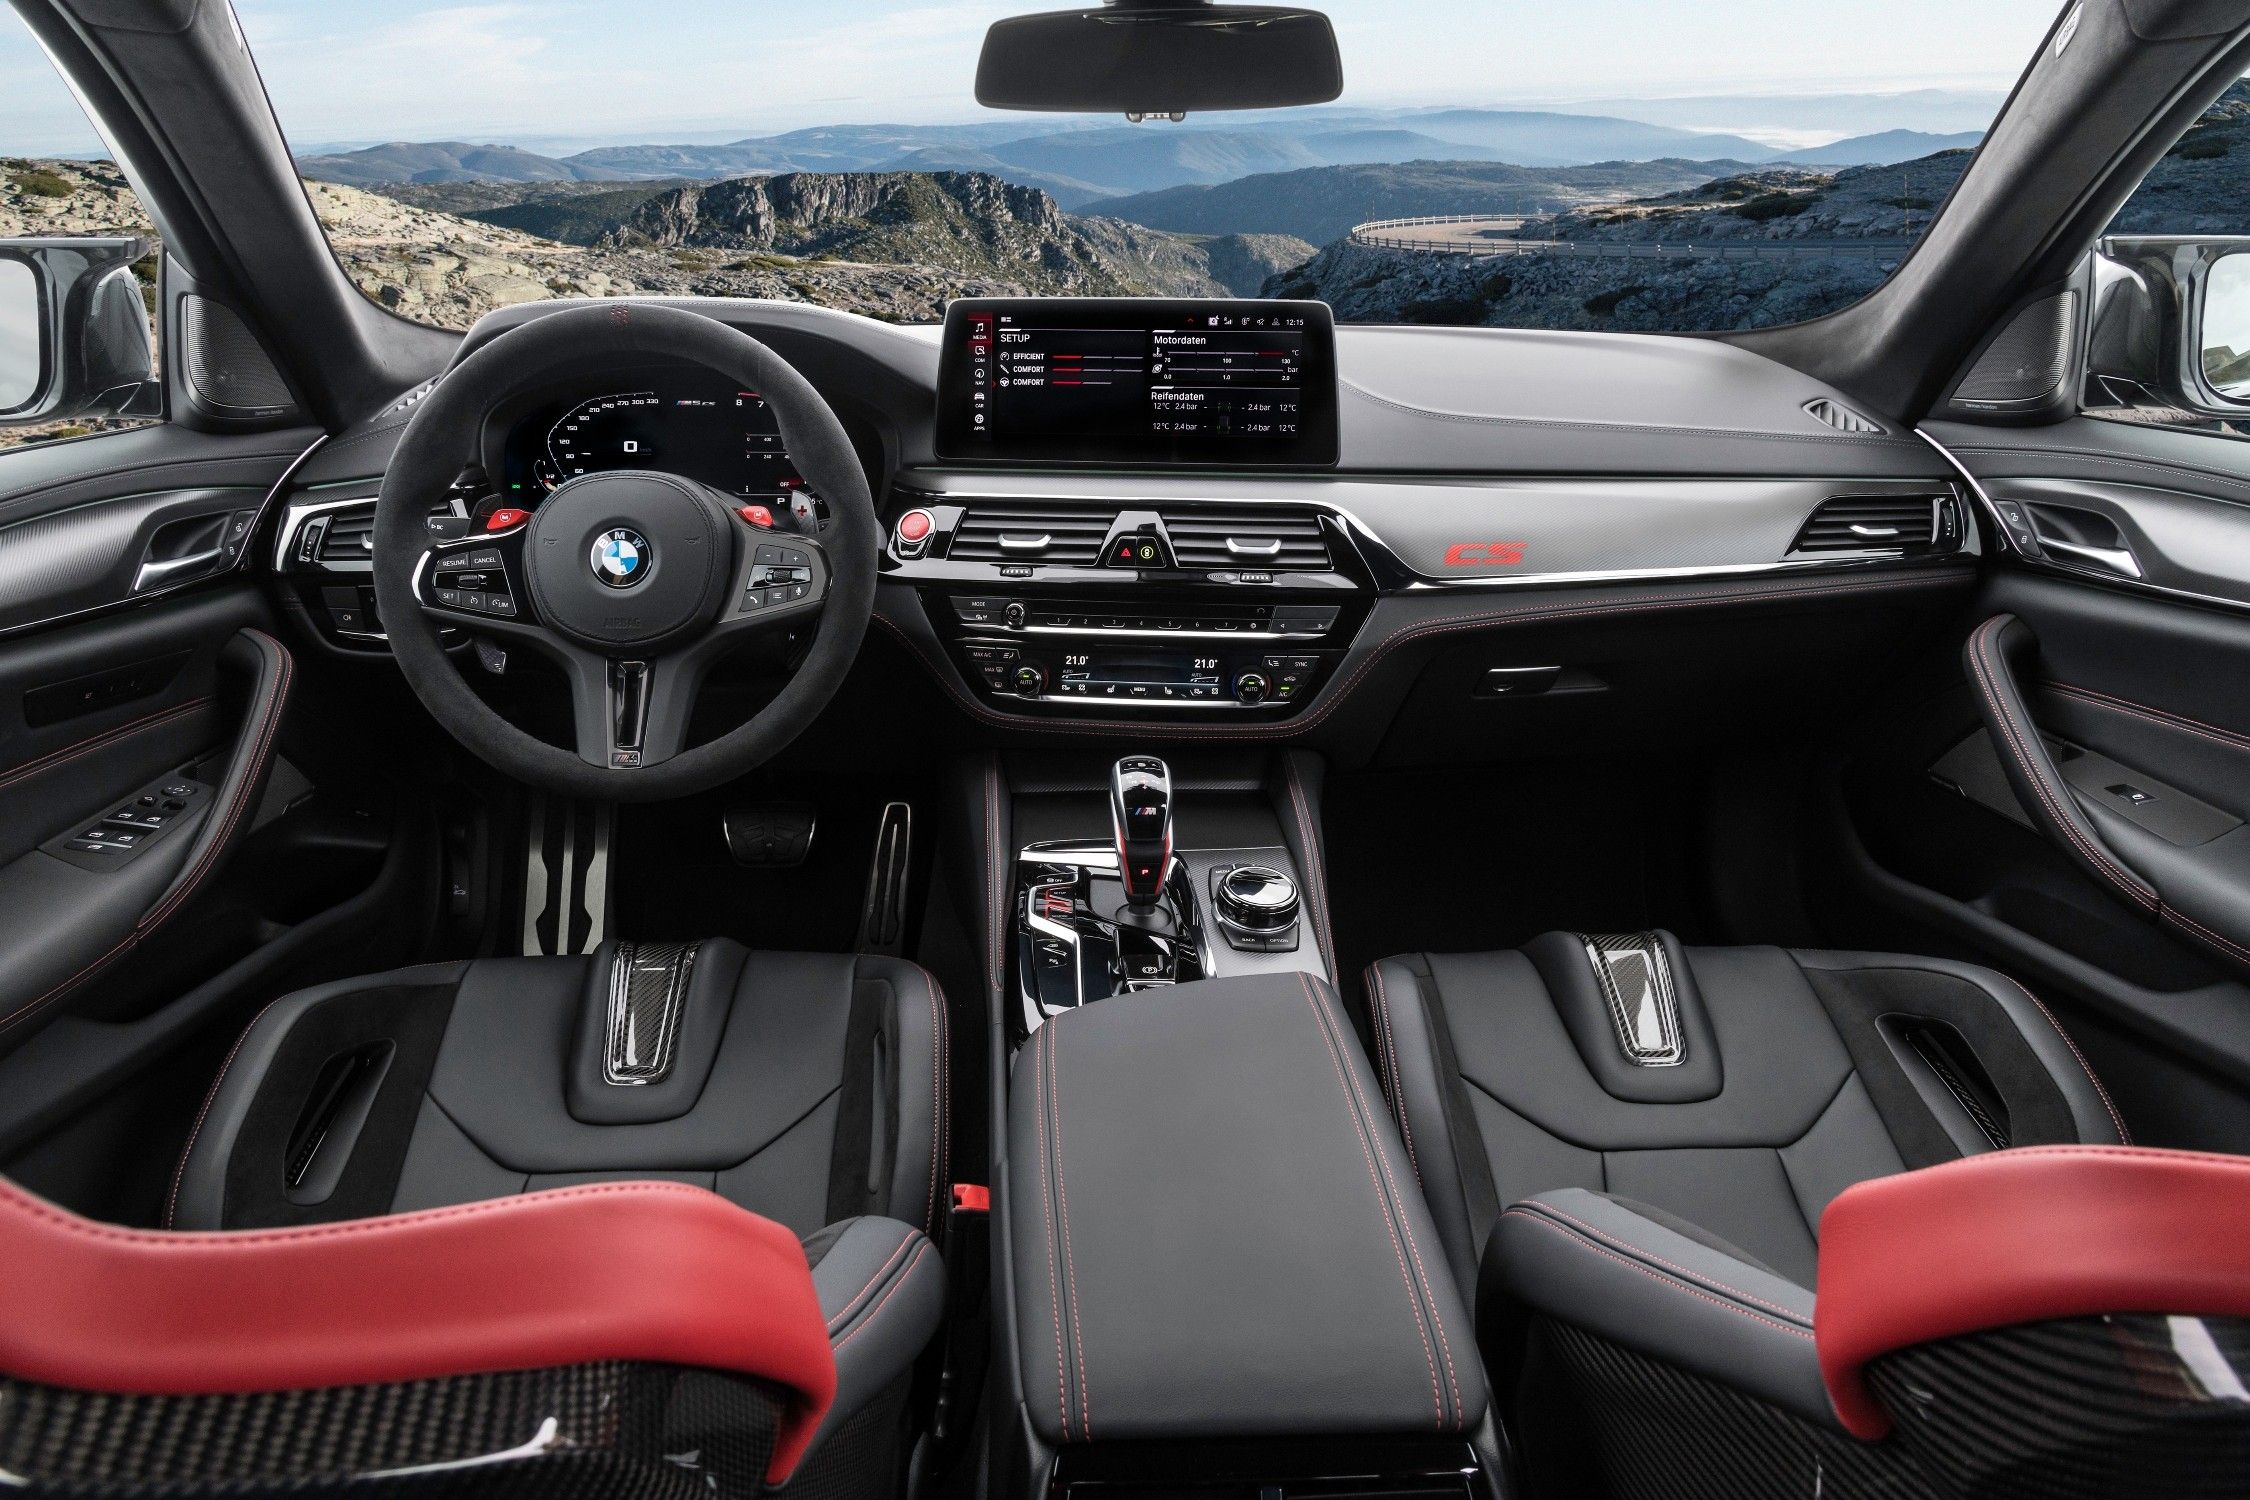 BMW M5 CS's Interior